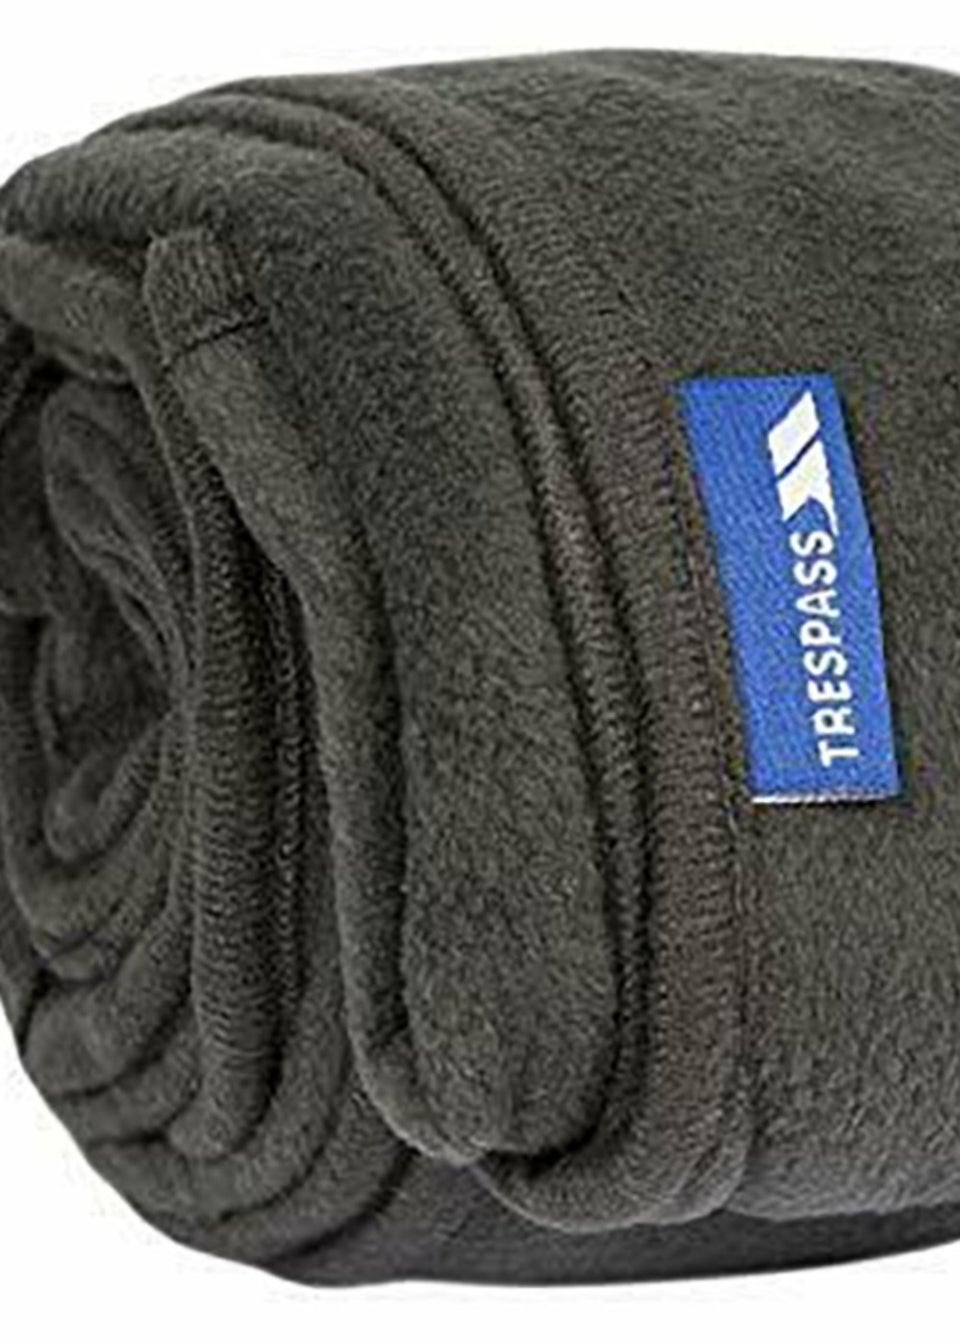 Trespass Charcoal Snuggles Fleece Trail Blanket - ASRTD